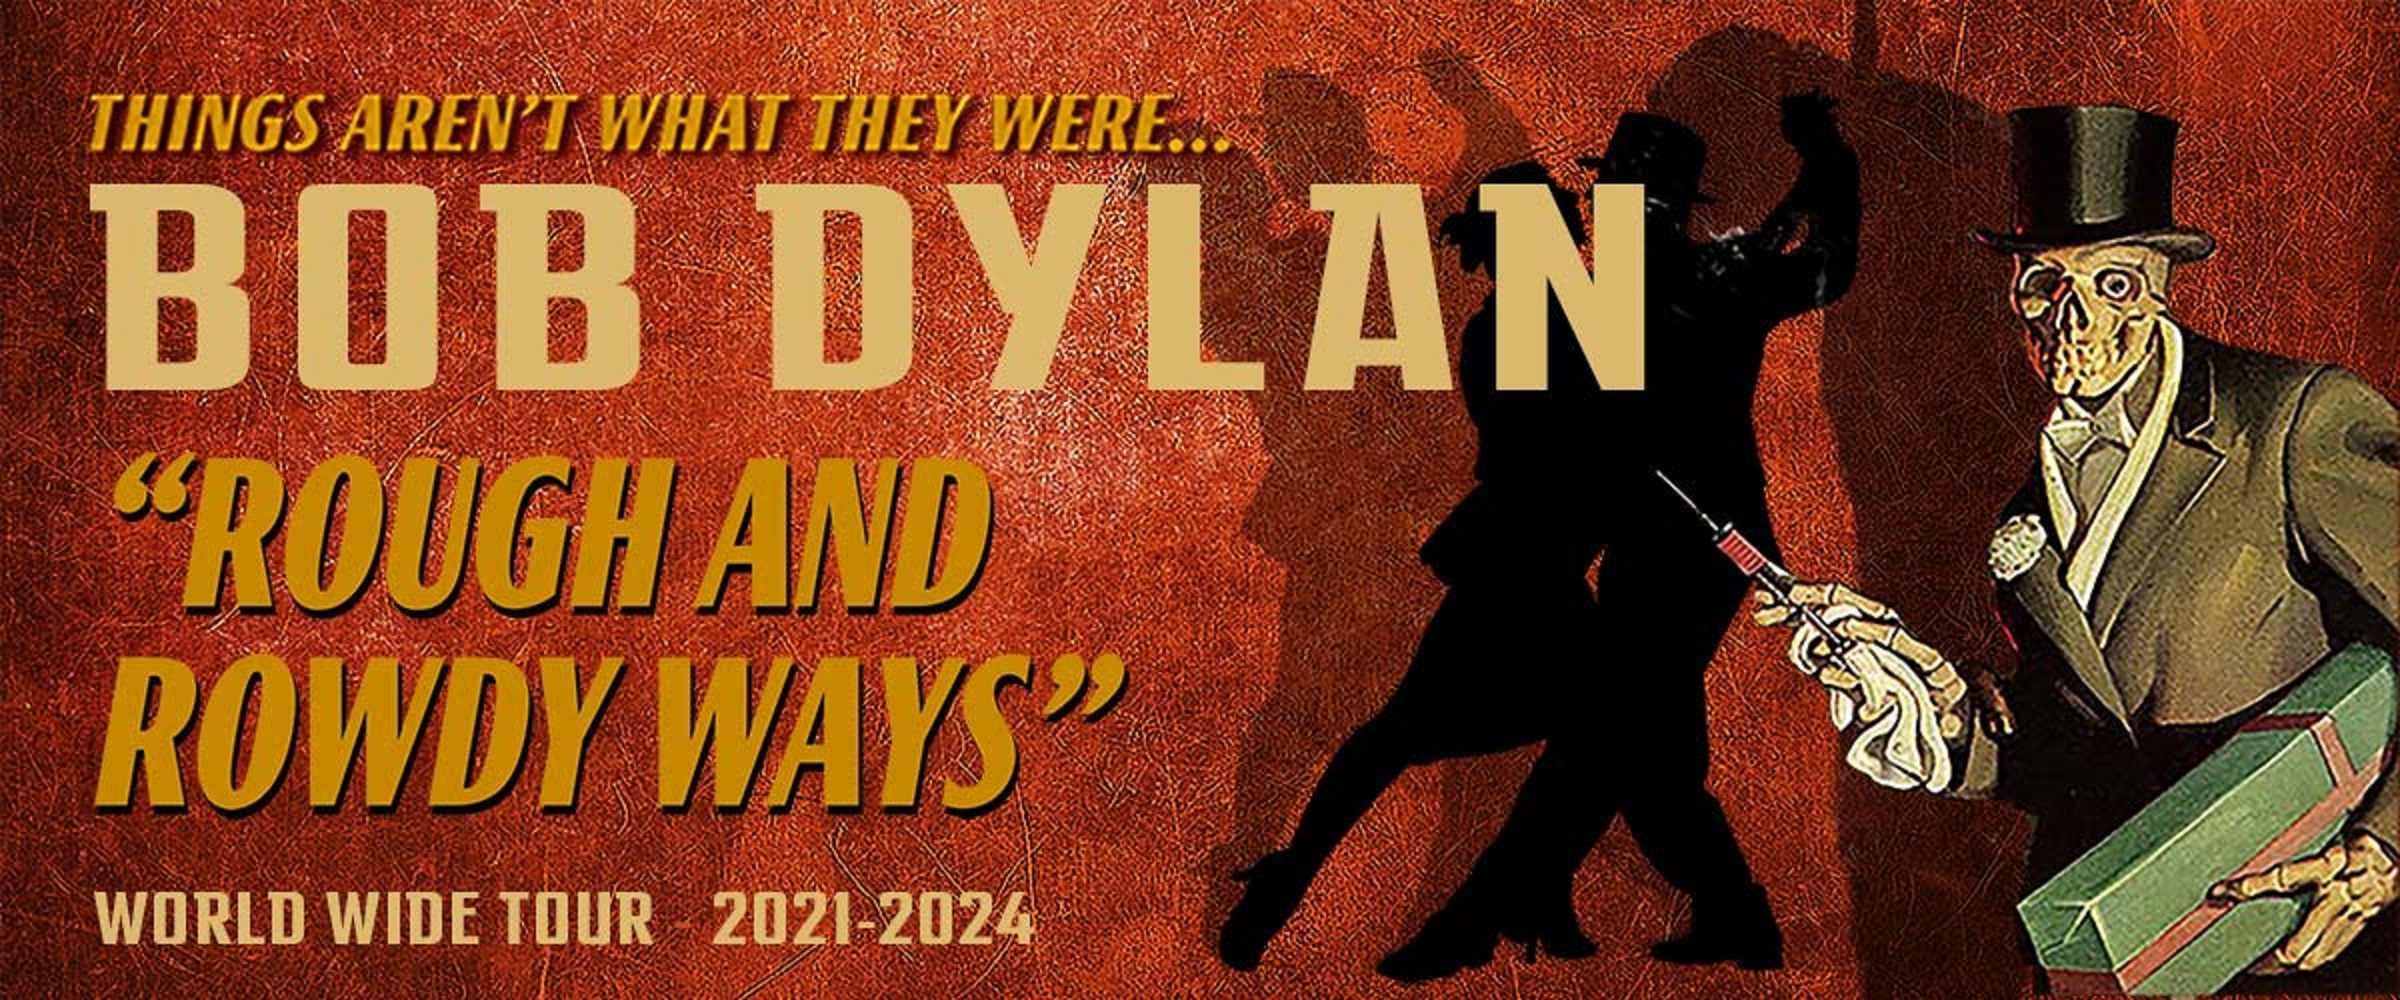 Bob Dylan is coming to Boston's Wang Theatre November 27